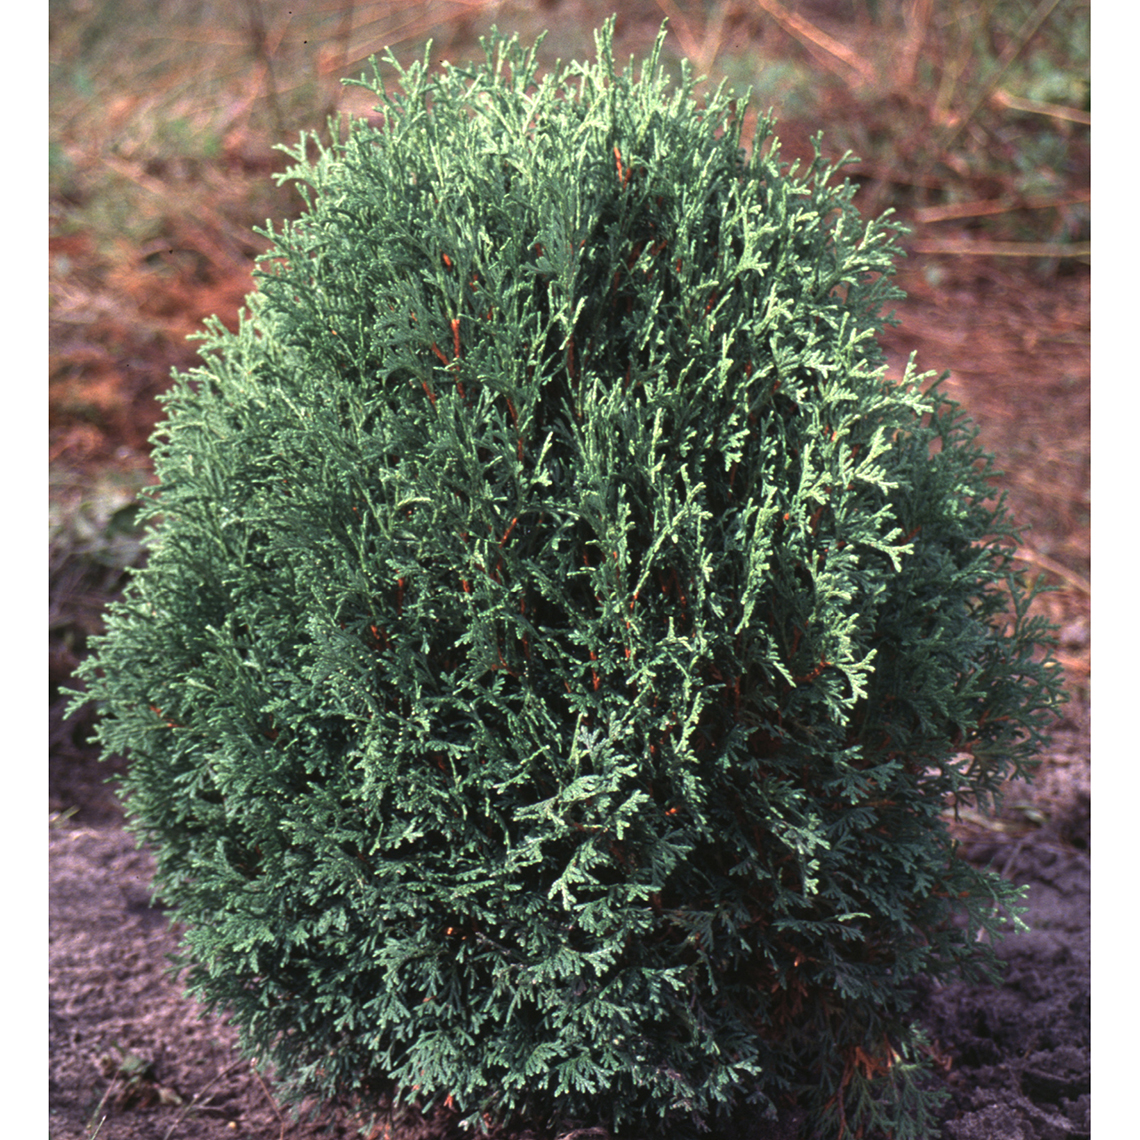 Little Gem arborvitae naturally grows as a squat but oblong evergreen dwarf shrub